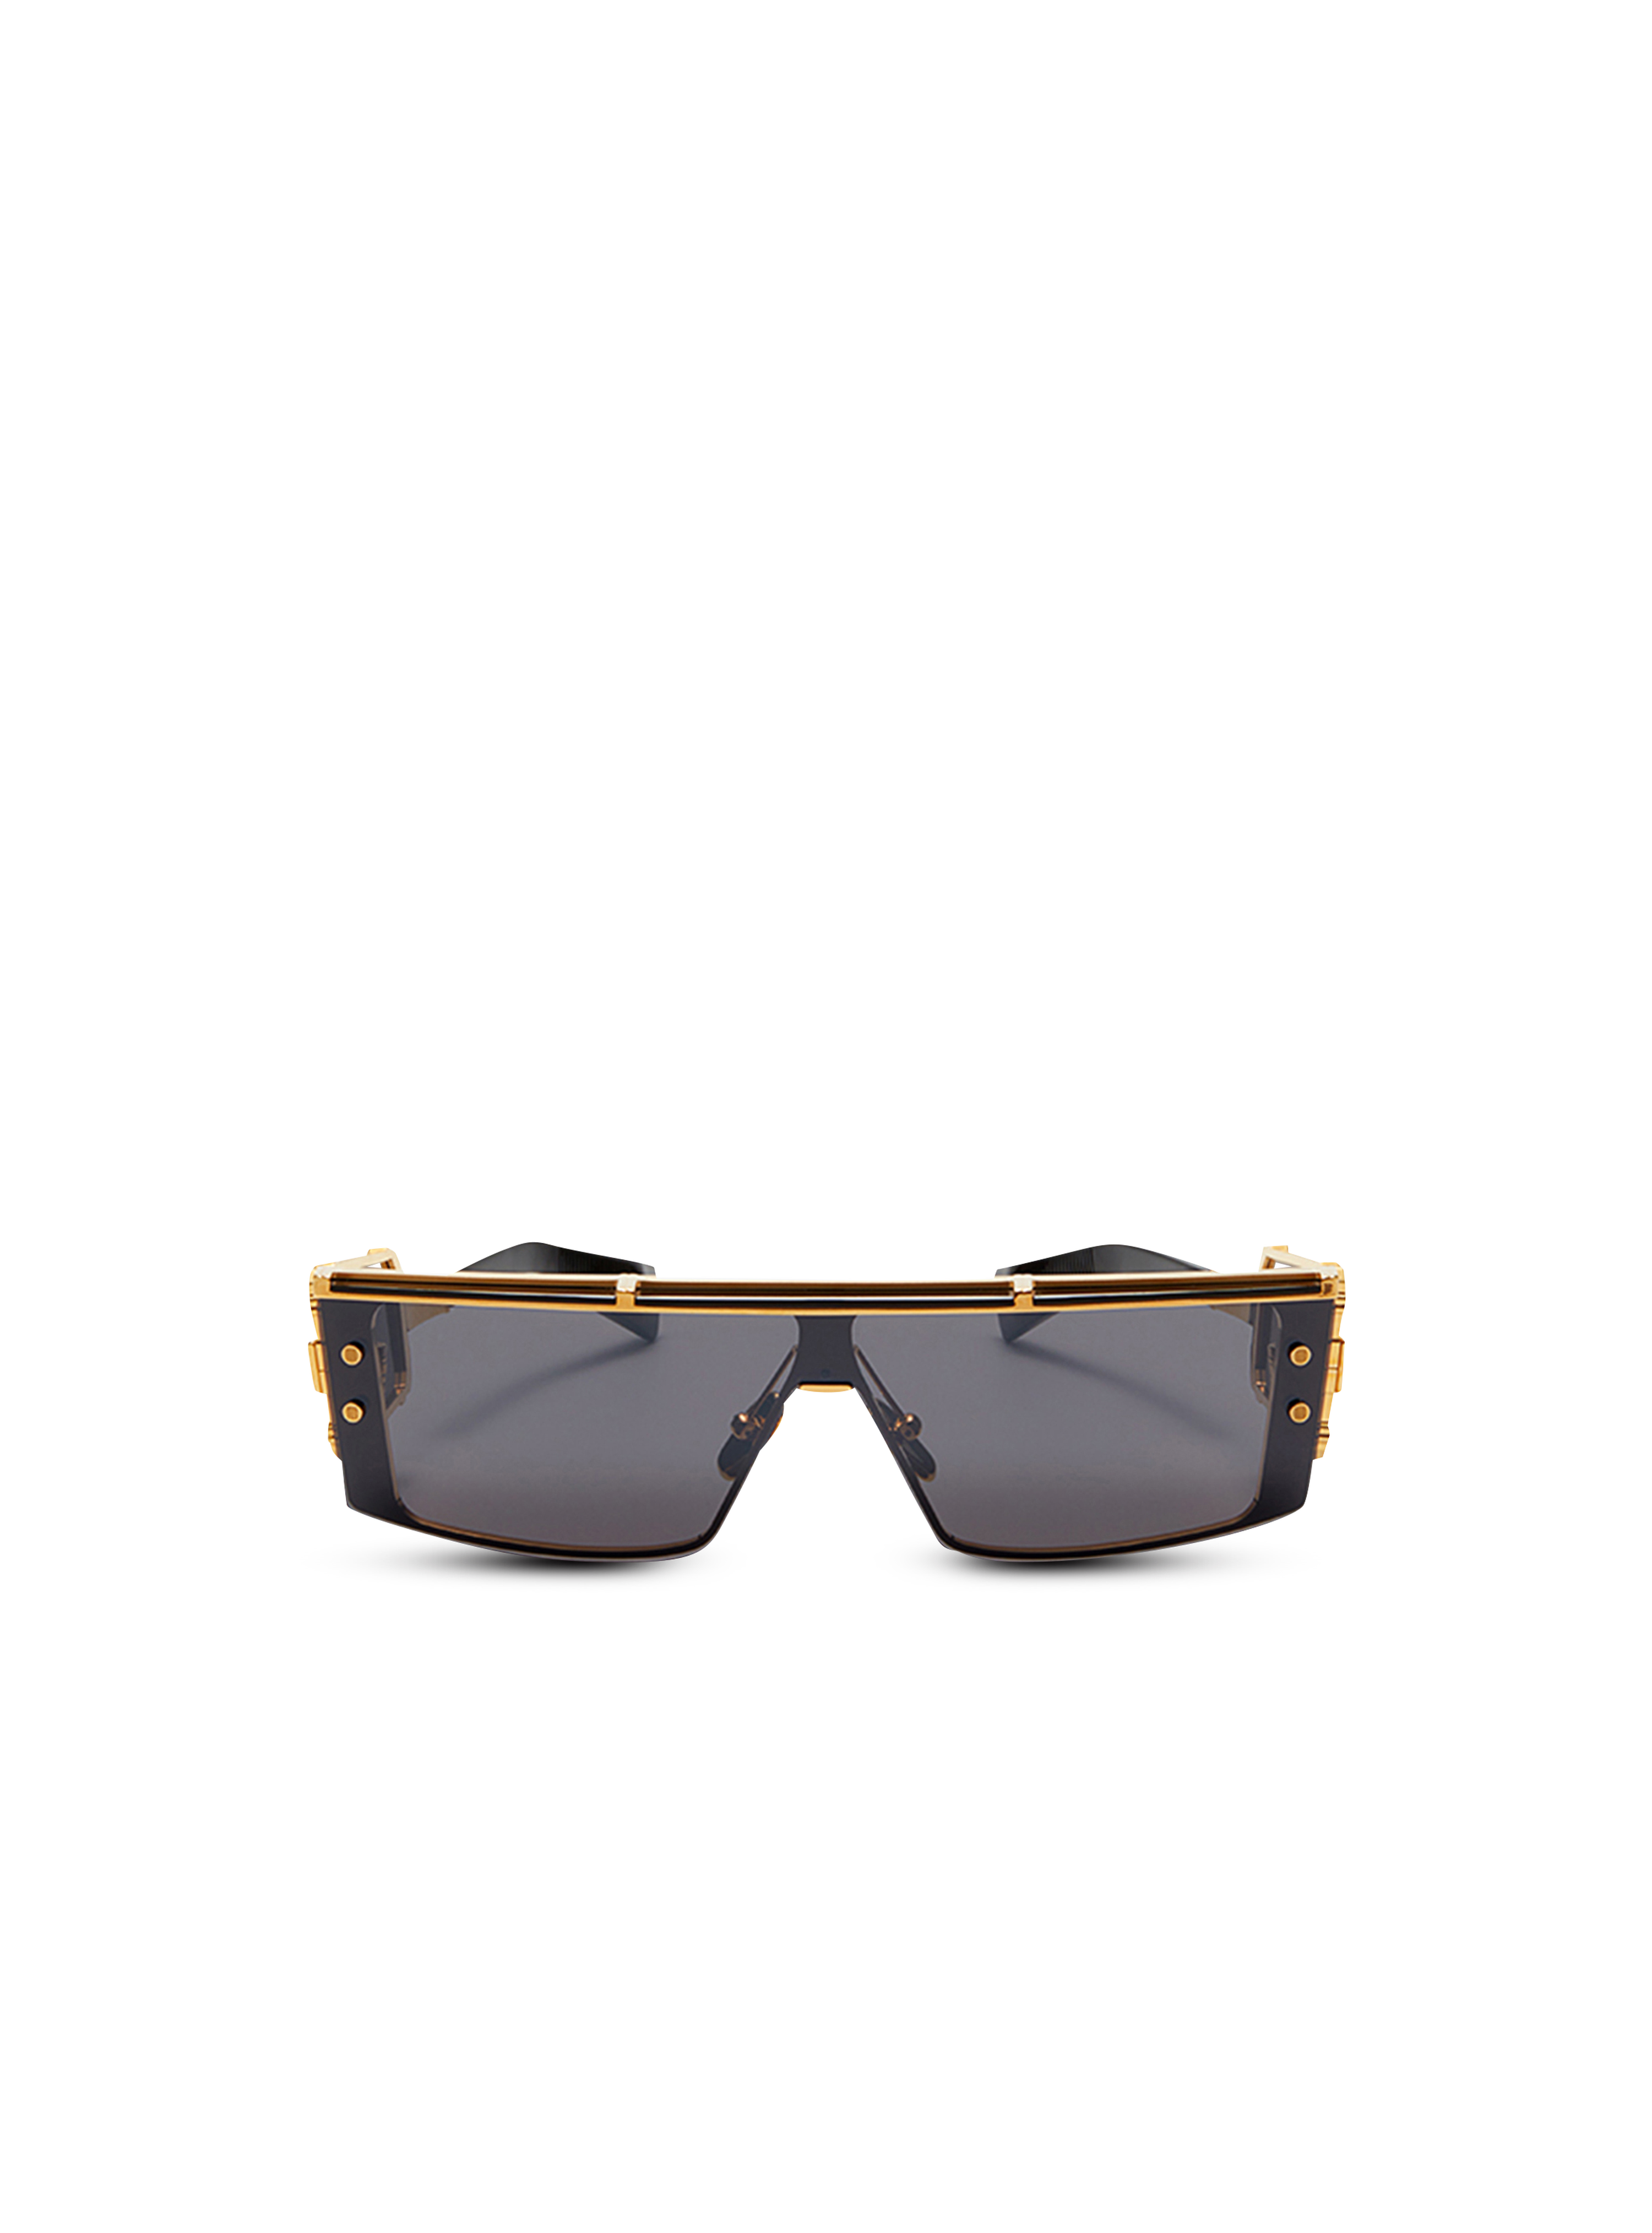 Wonder Boy III sunglasses, black